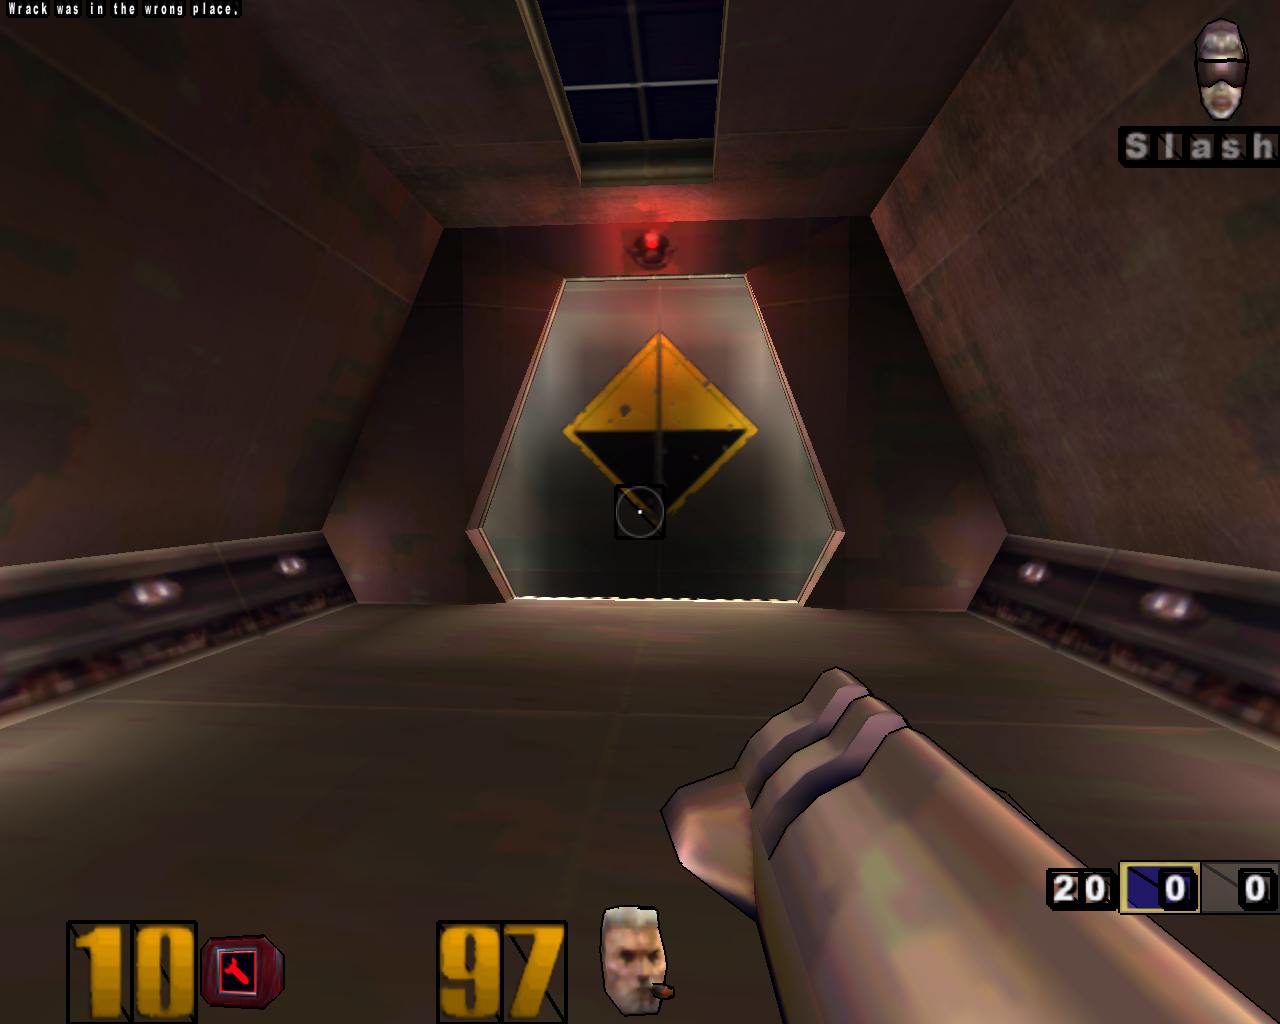 Quake III Arena Cell Shading